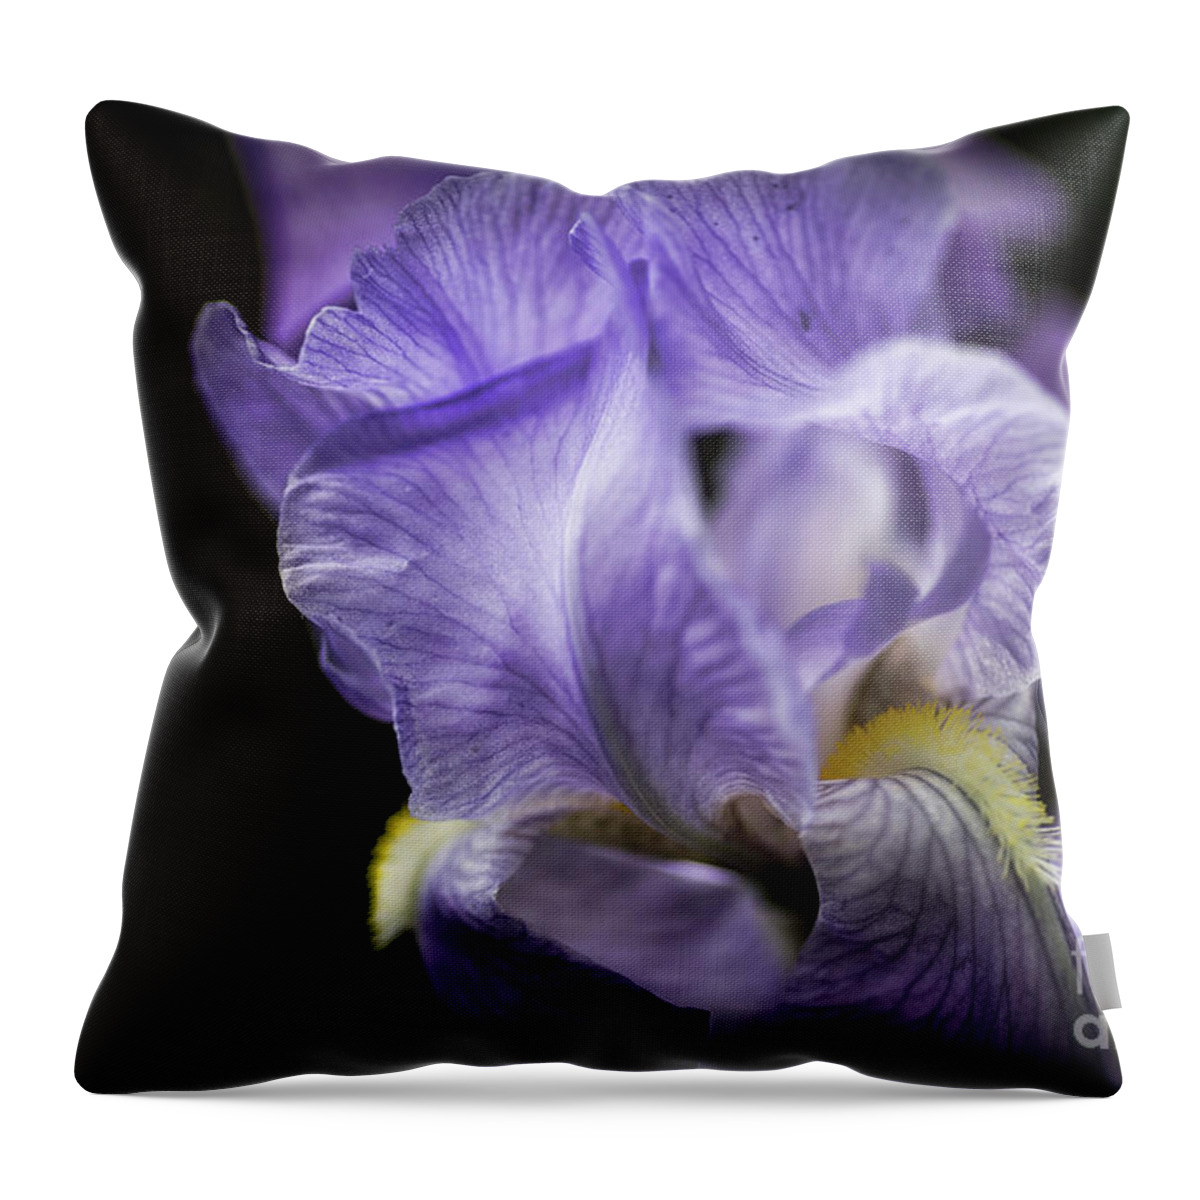 Blue Bearded Iris Throw Pillow featuring the photograph Soul Blossom - Blue Bearded Iris by Mary Lou Chmura